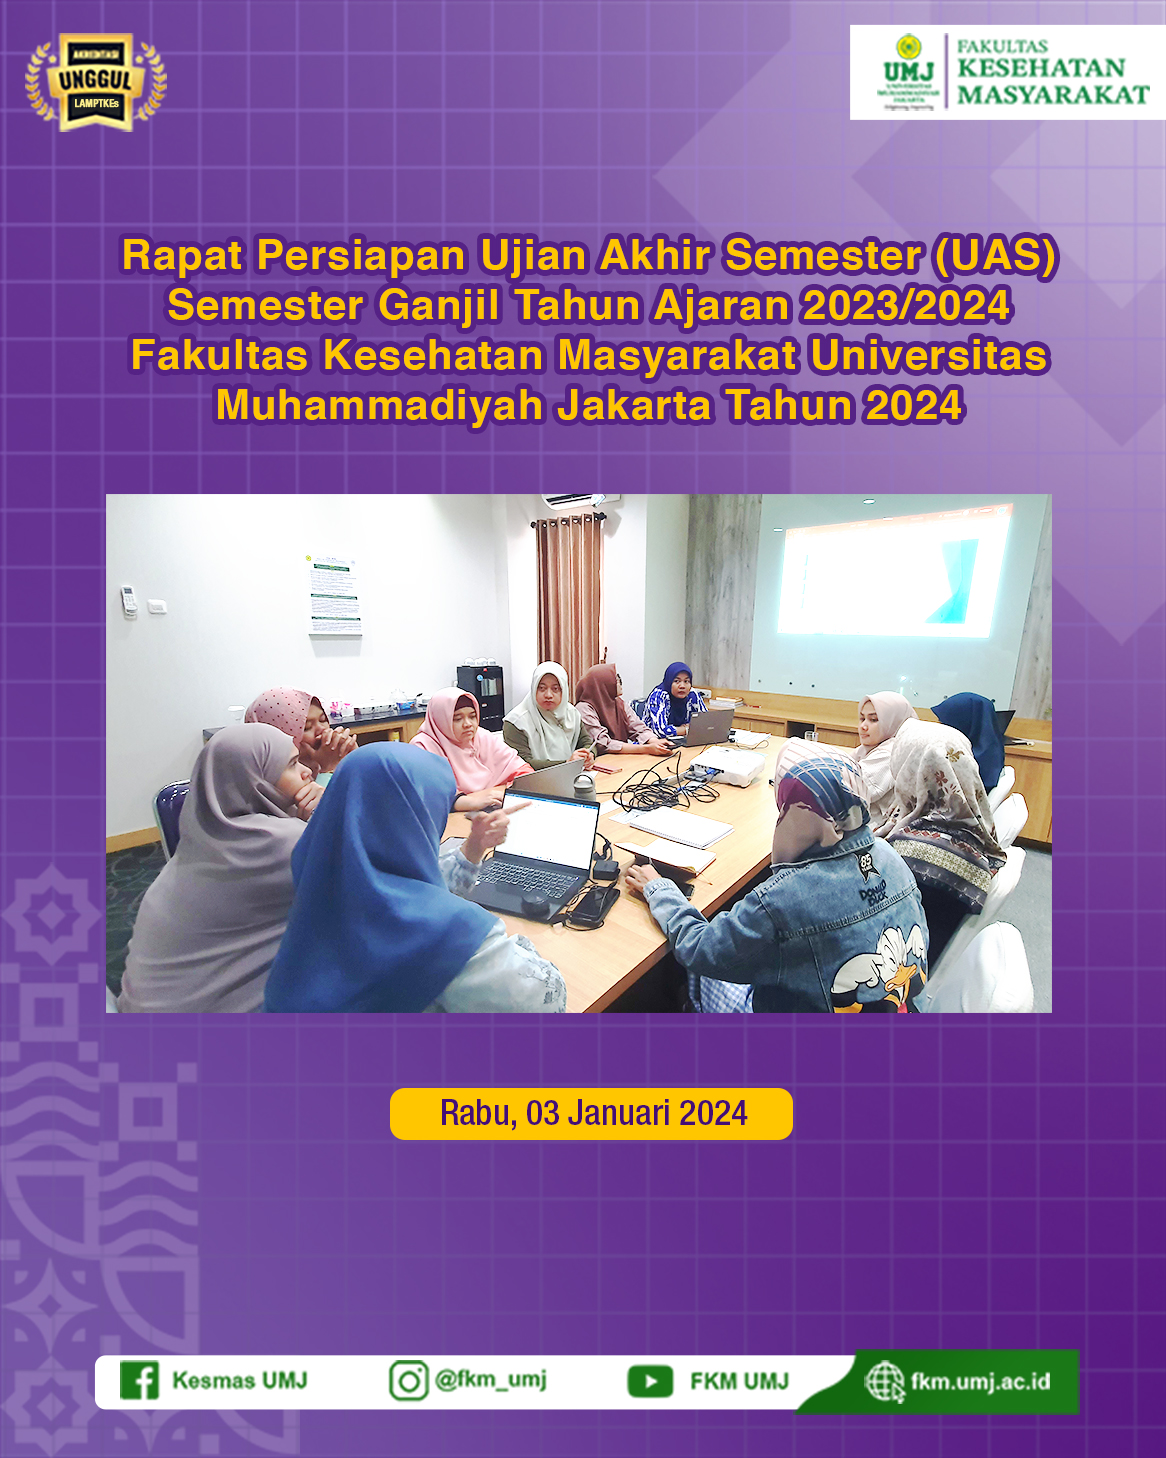 Rapat Persiapan Ujian Akhir Semester (UAS) Semester Ganjil Tahun Ajaran 2023/2024 di Fakultas Kesehatan Masyarakat Universitas Muhammadiyah Jakarta